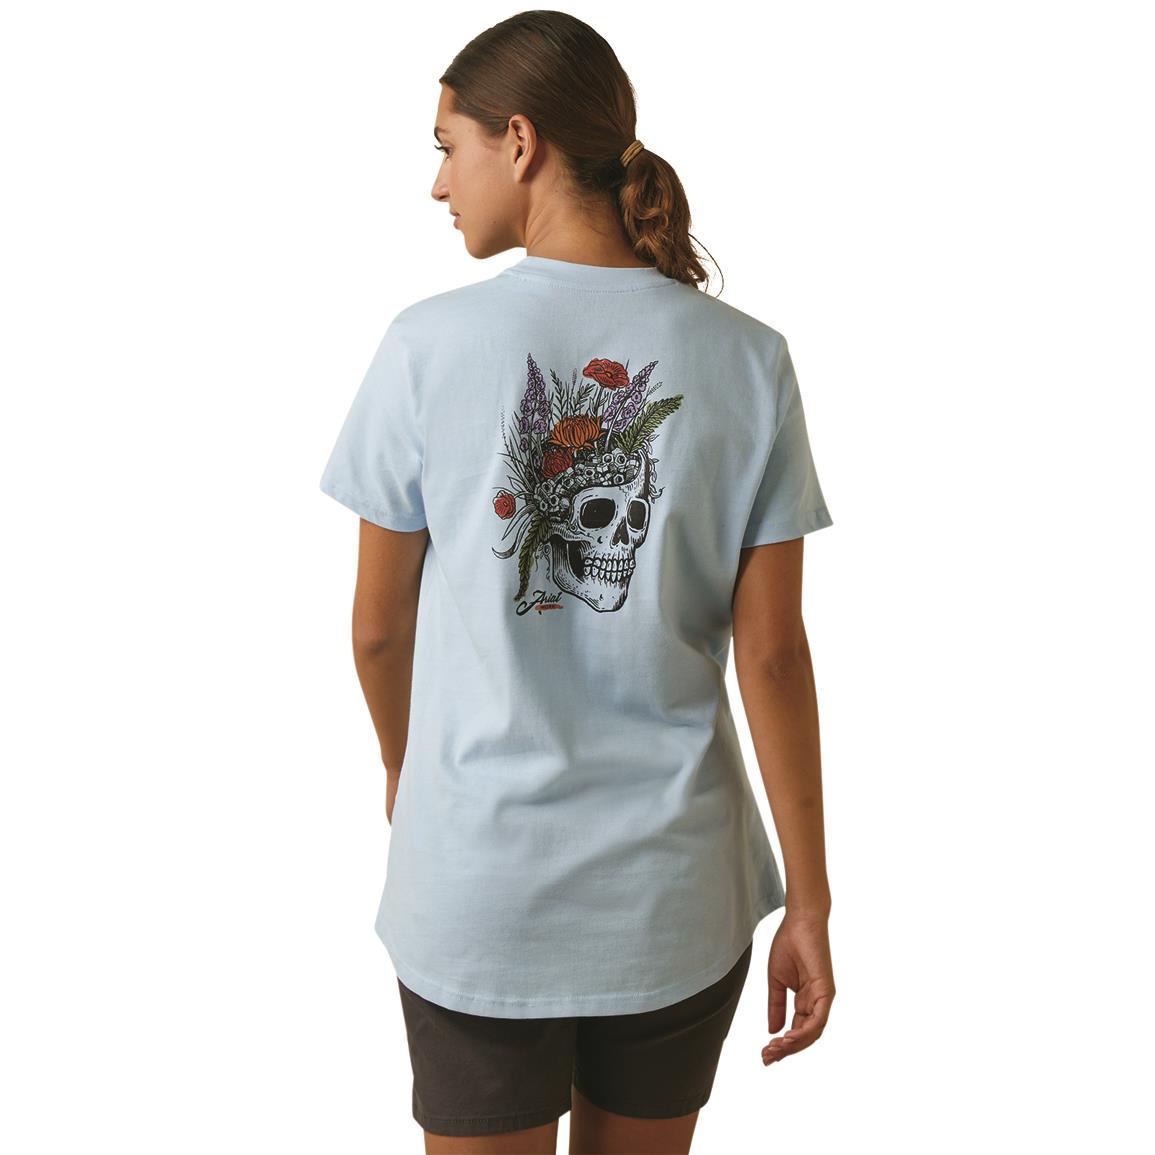 Ariat Women's Rebar CottonStrong Roughneck Graphic T-Shirt, Clear Sky